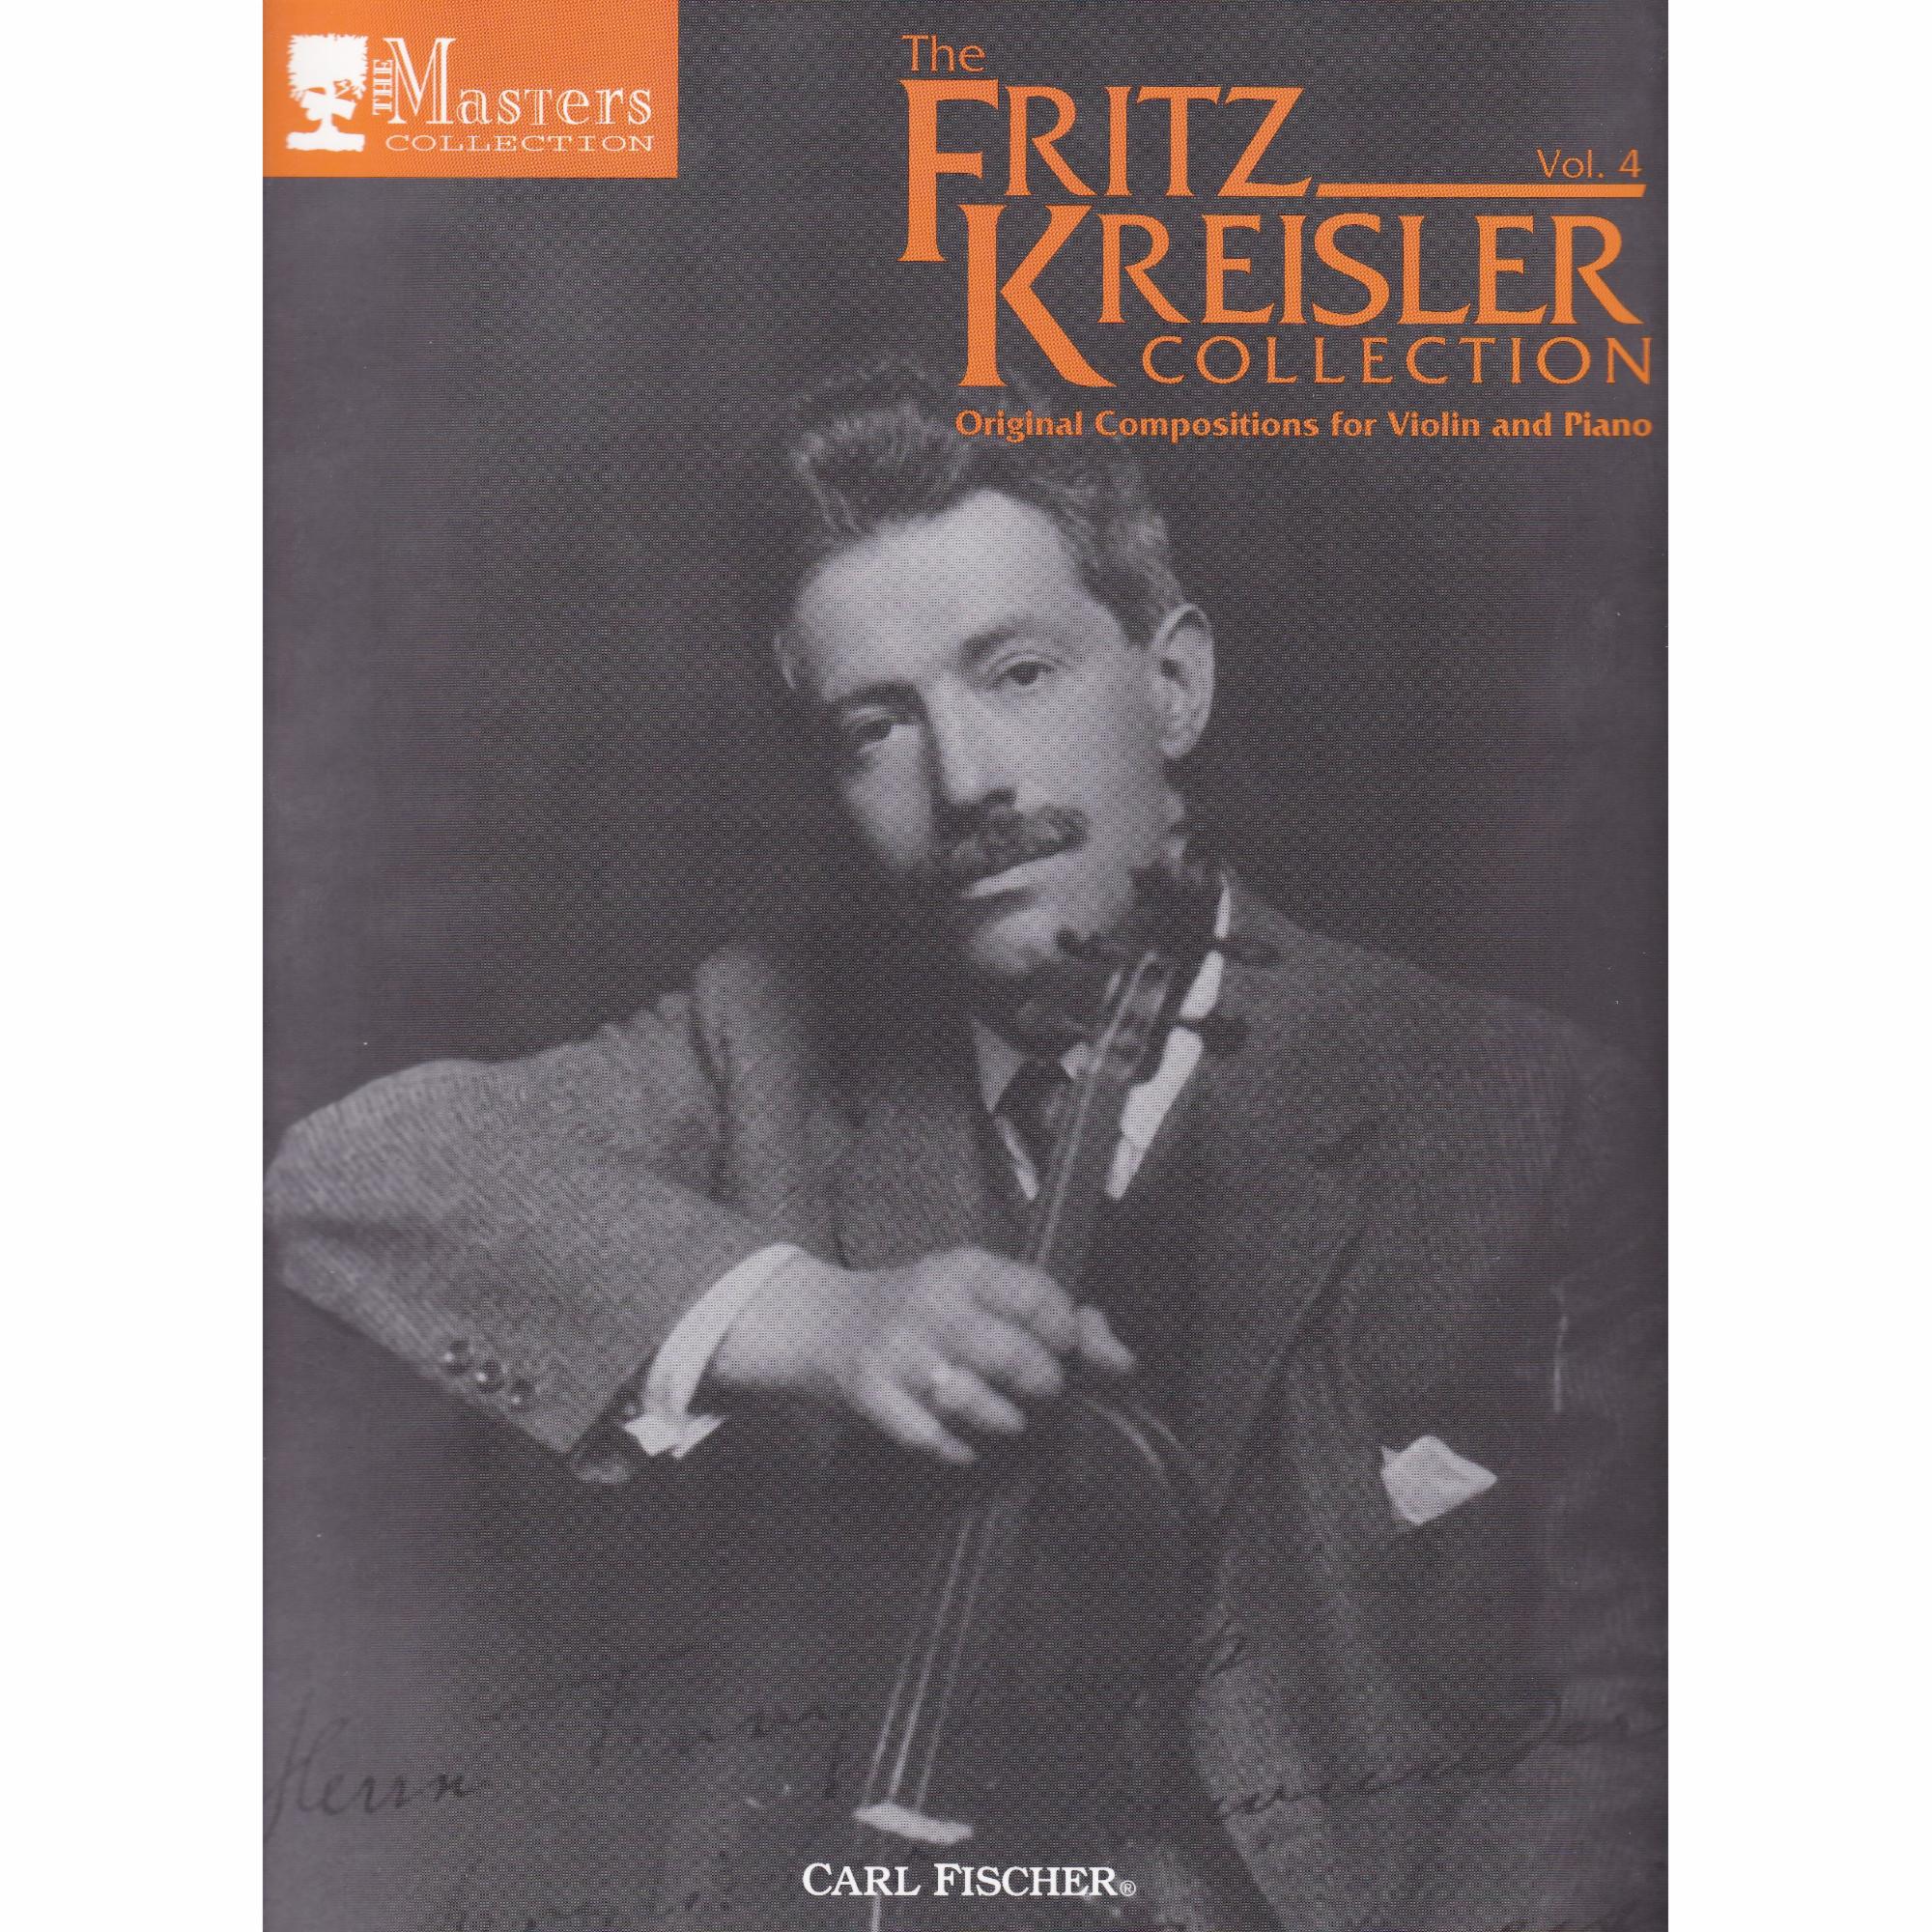 The Fritz Kreisler Collection, Volume IV